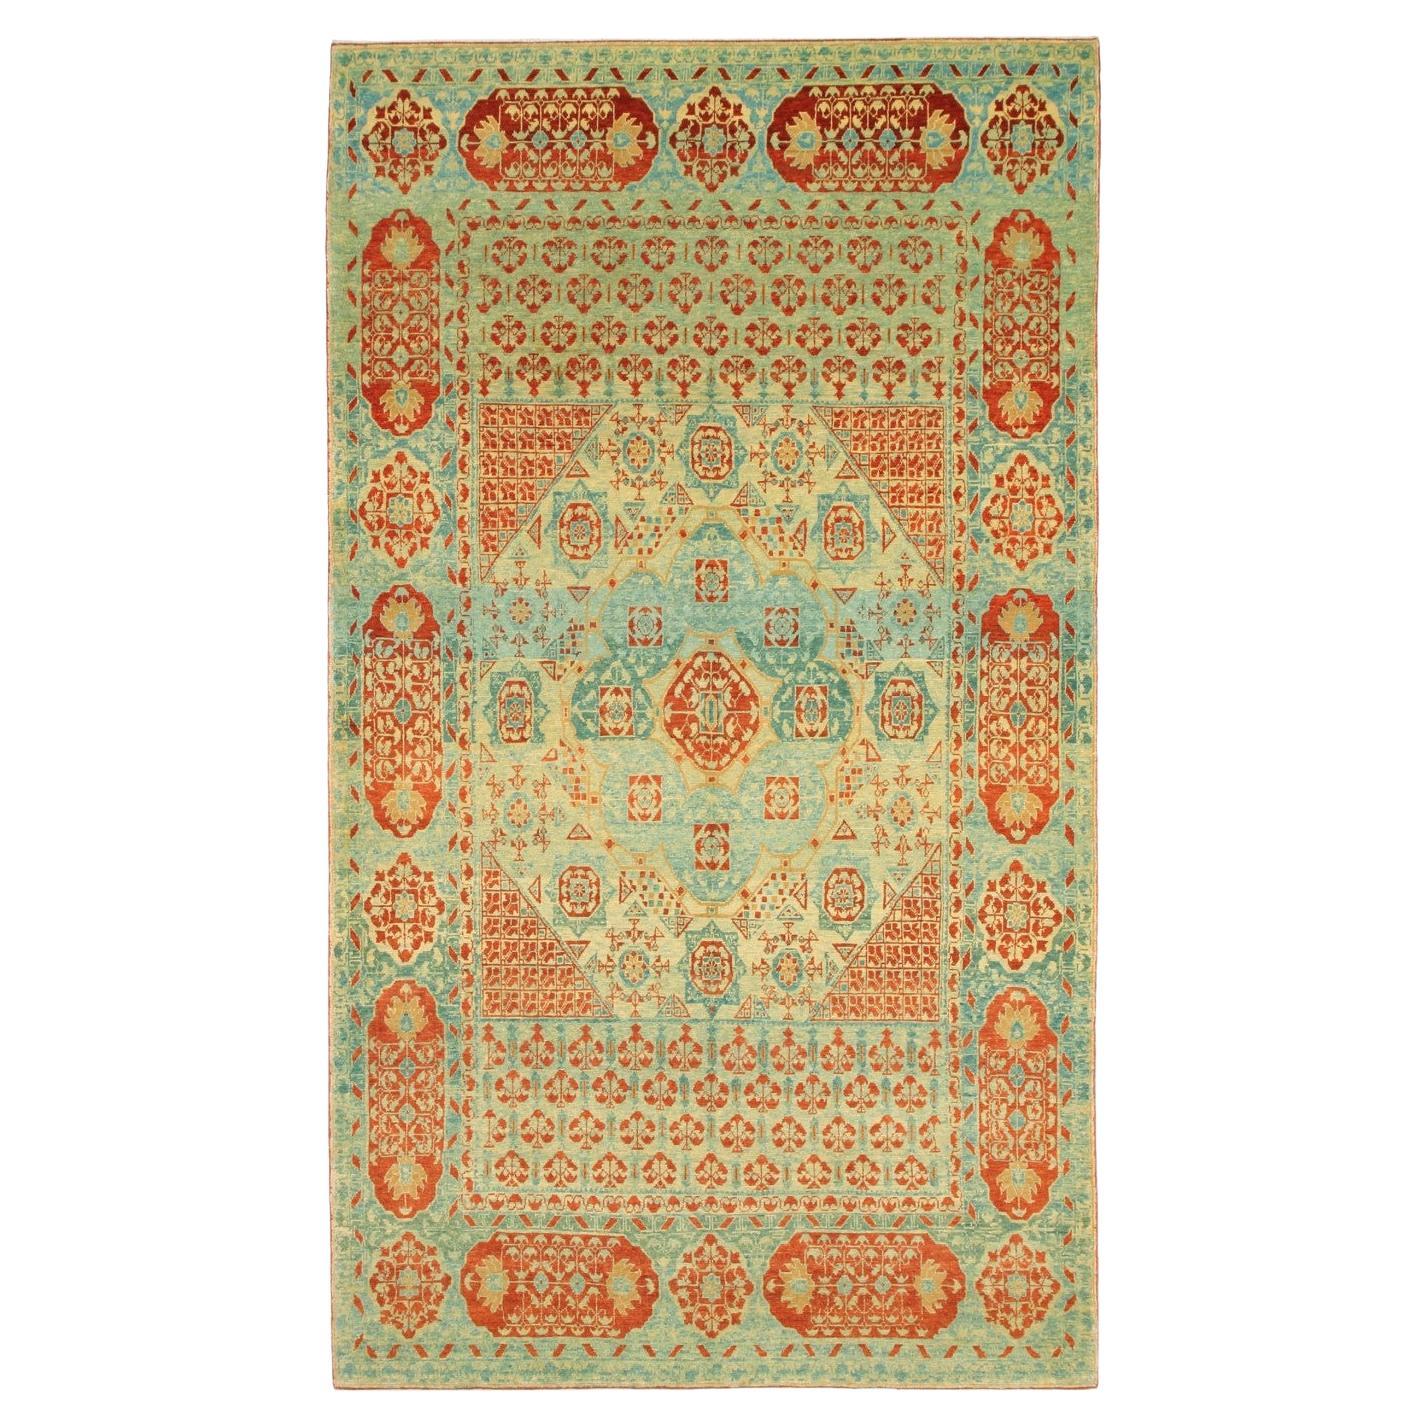 Ararat Rugs The Simonetti Mamluk Carpet 16th C. Revival Rug, Square Natural Dyed For Sale